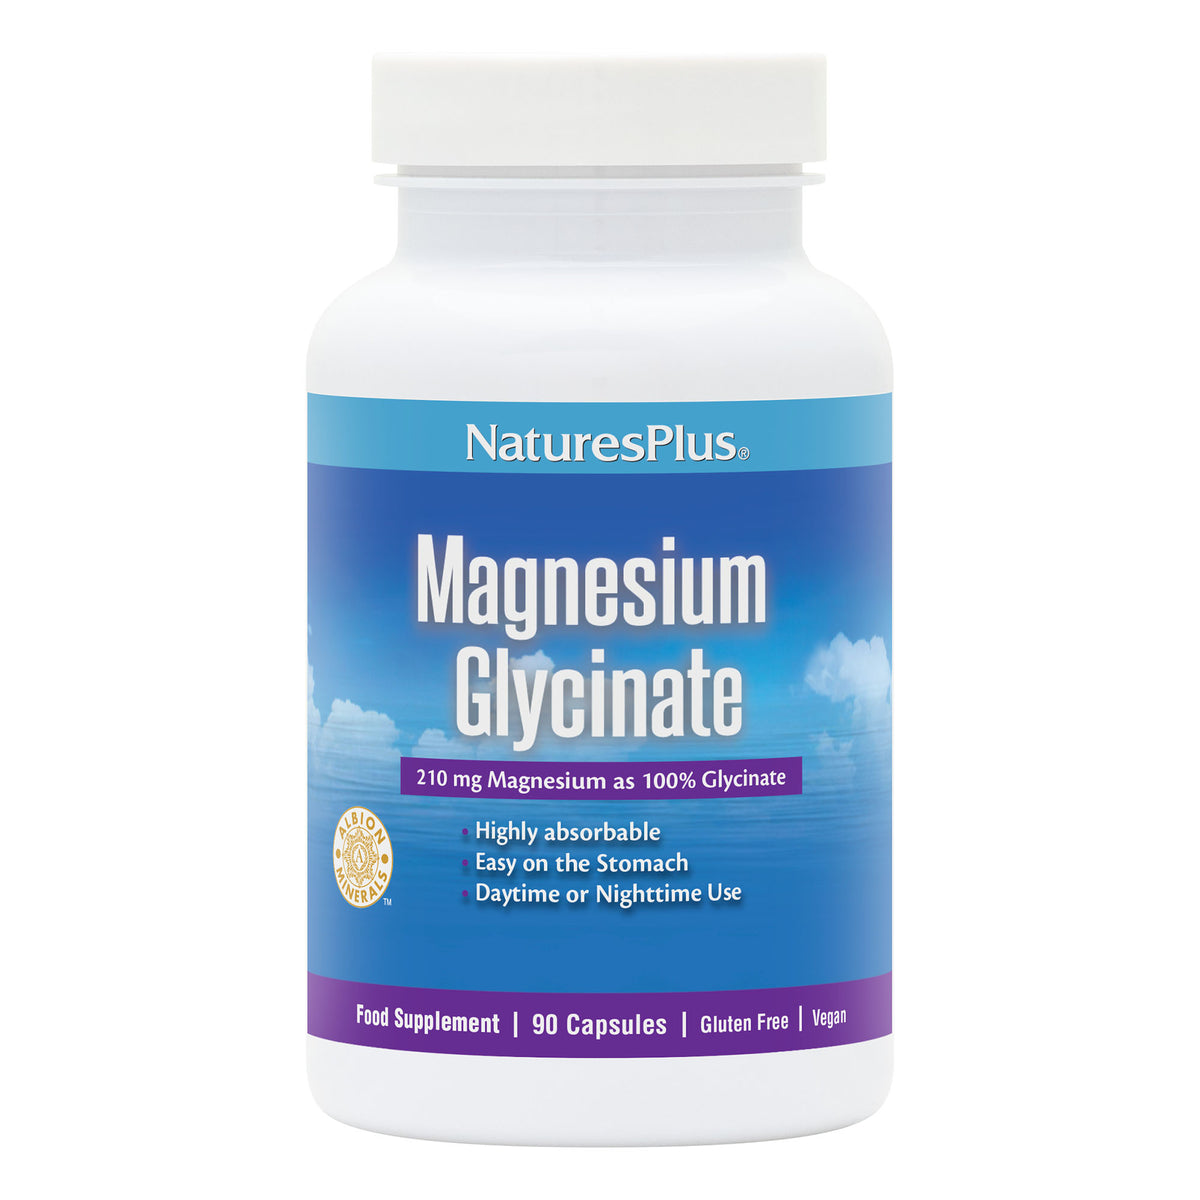 product image of Magnesium Glycinate Capsules containing Magnesium Glycinate Capsules